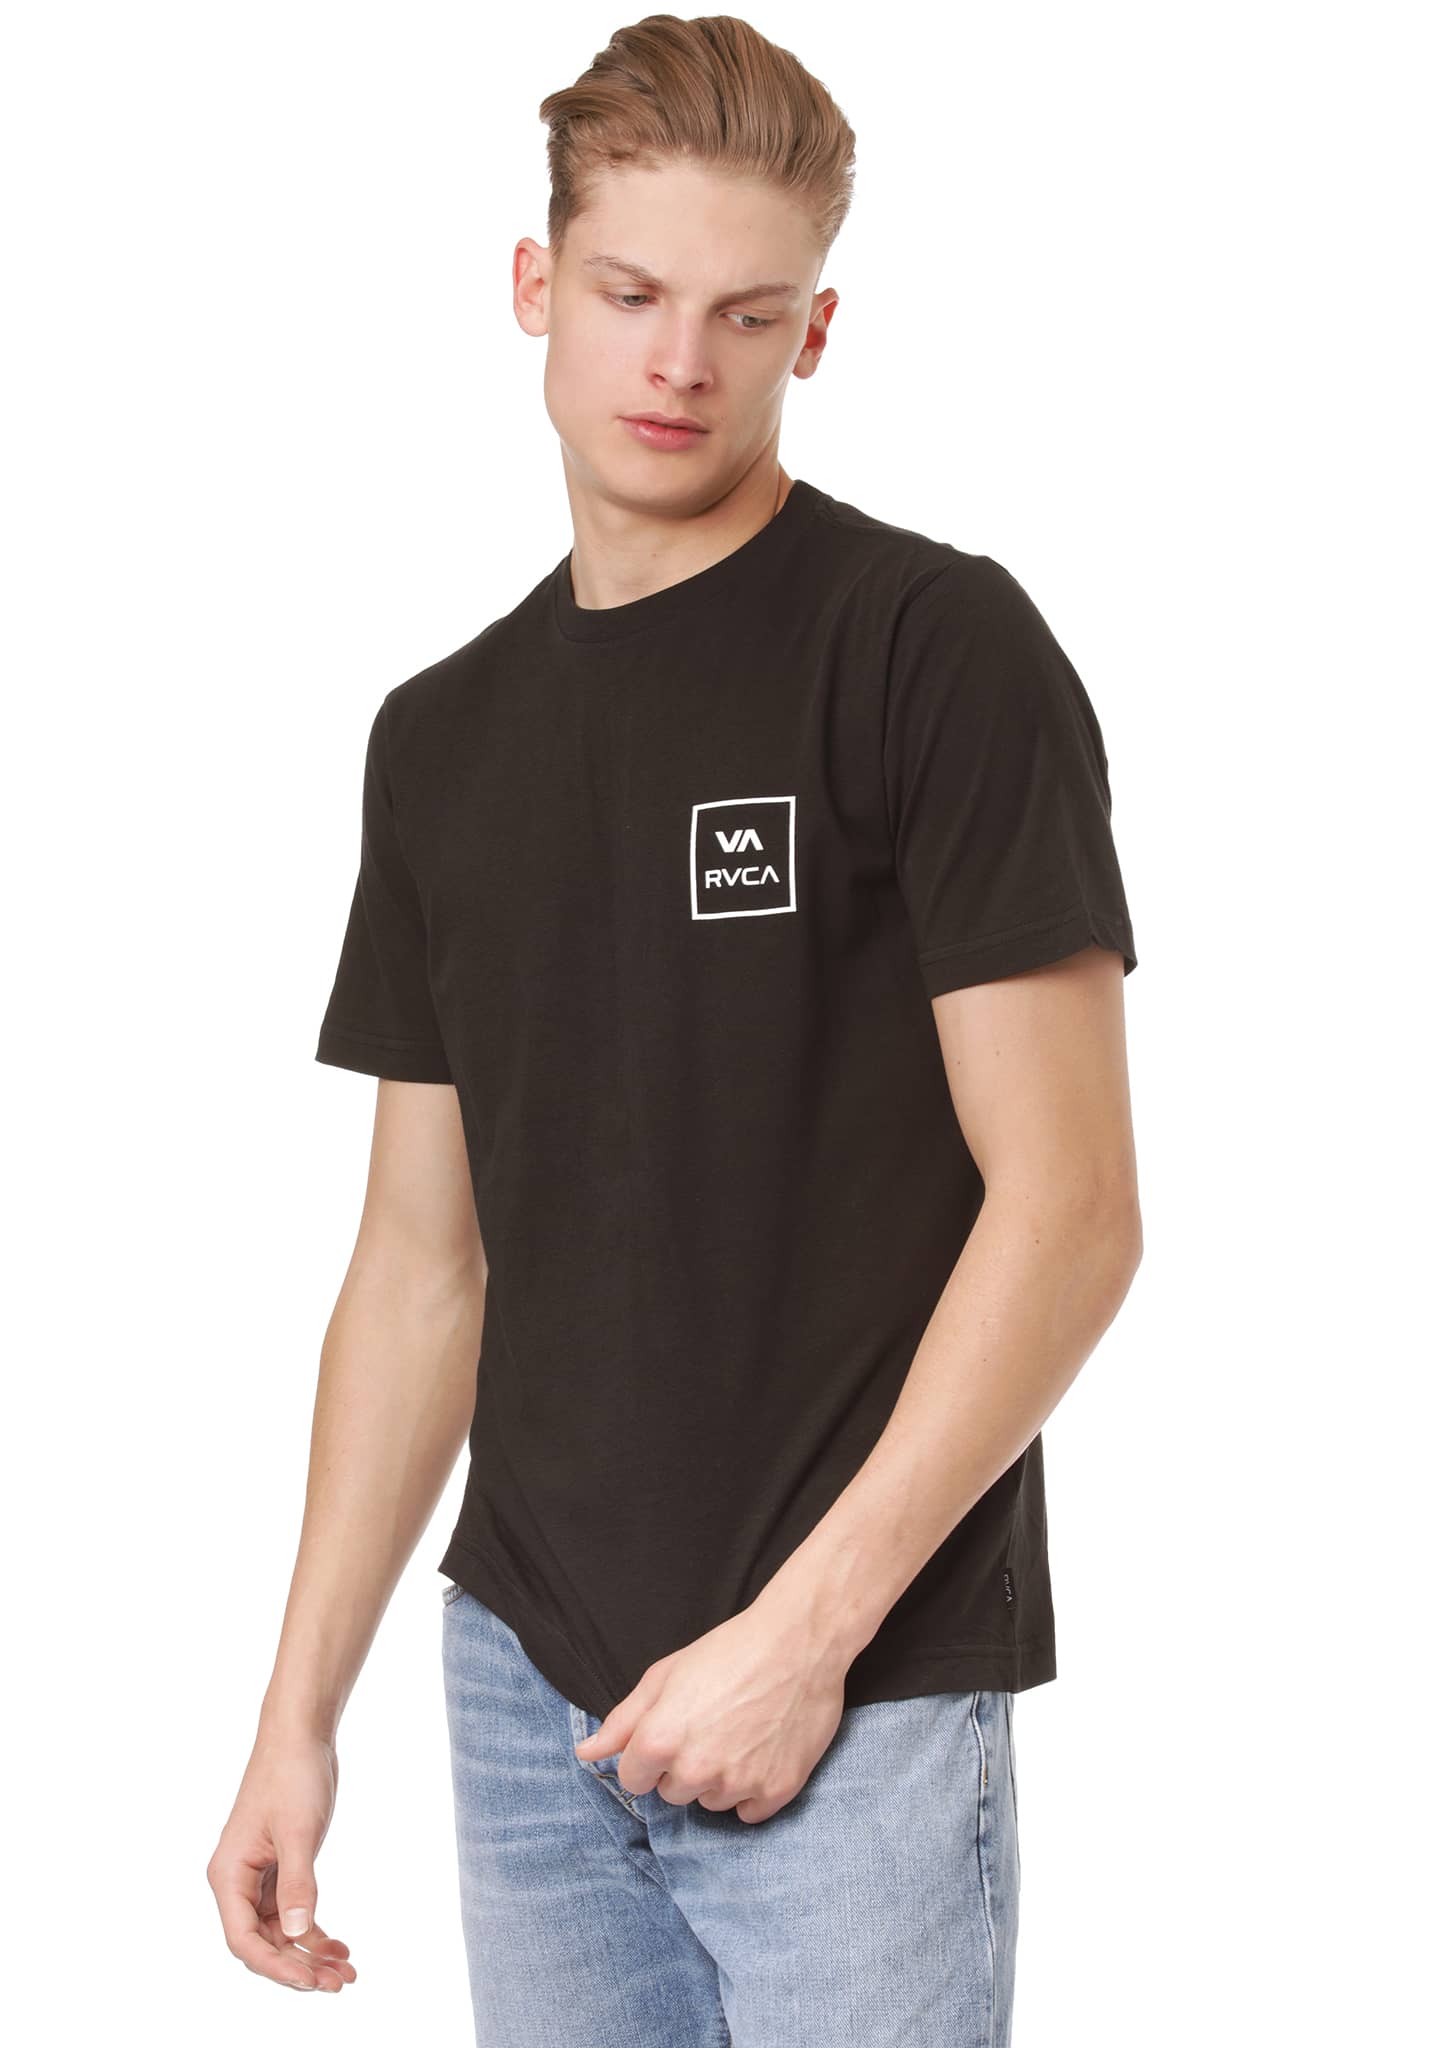 Rvca Va All The Ways T-Shirt black S